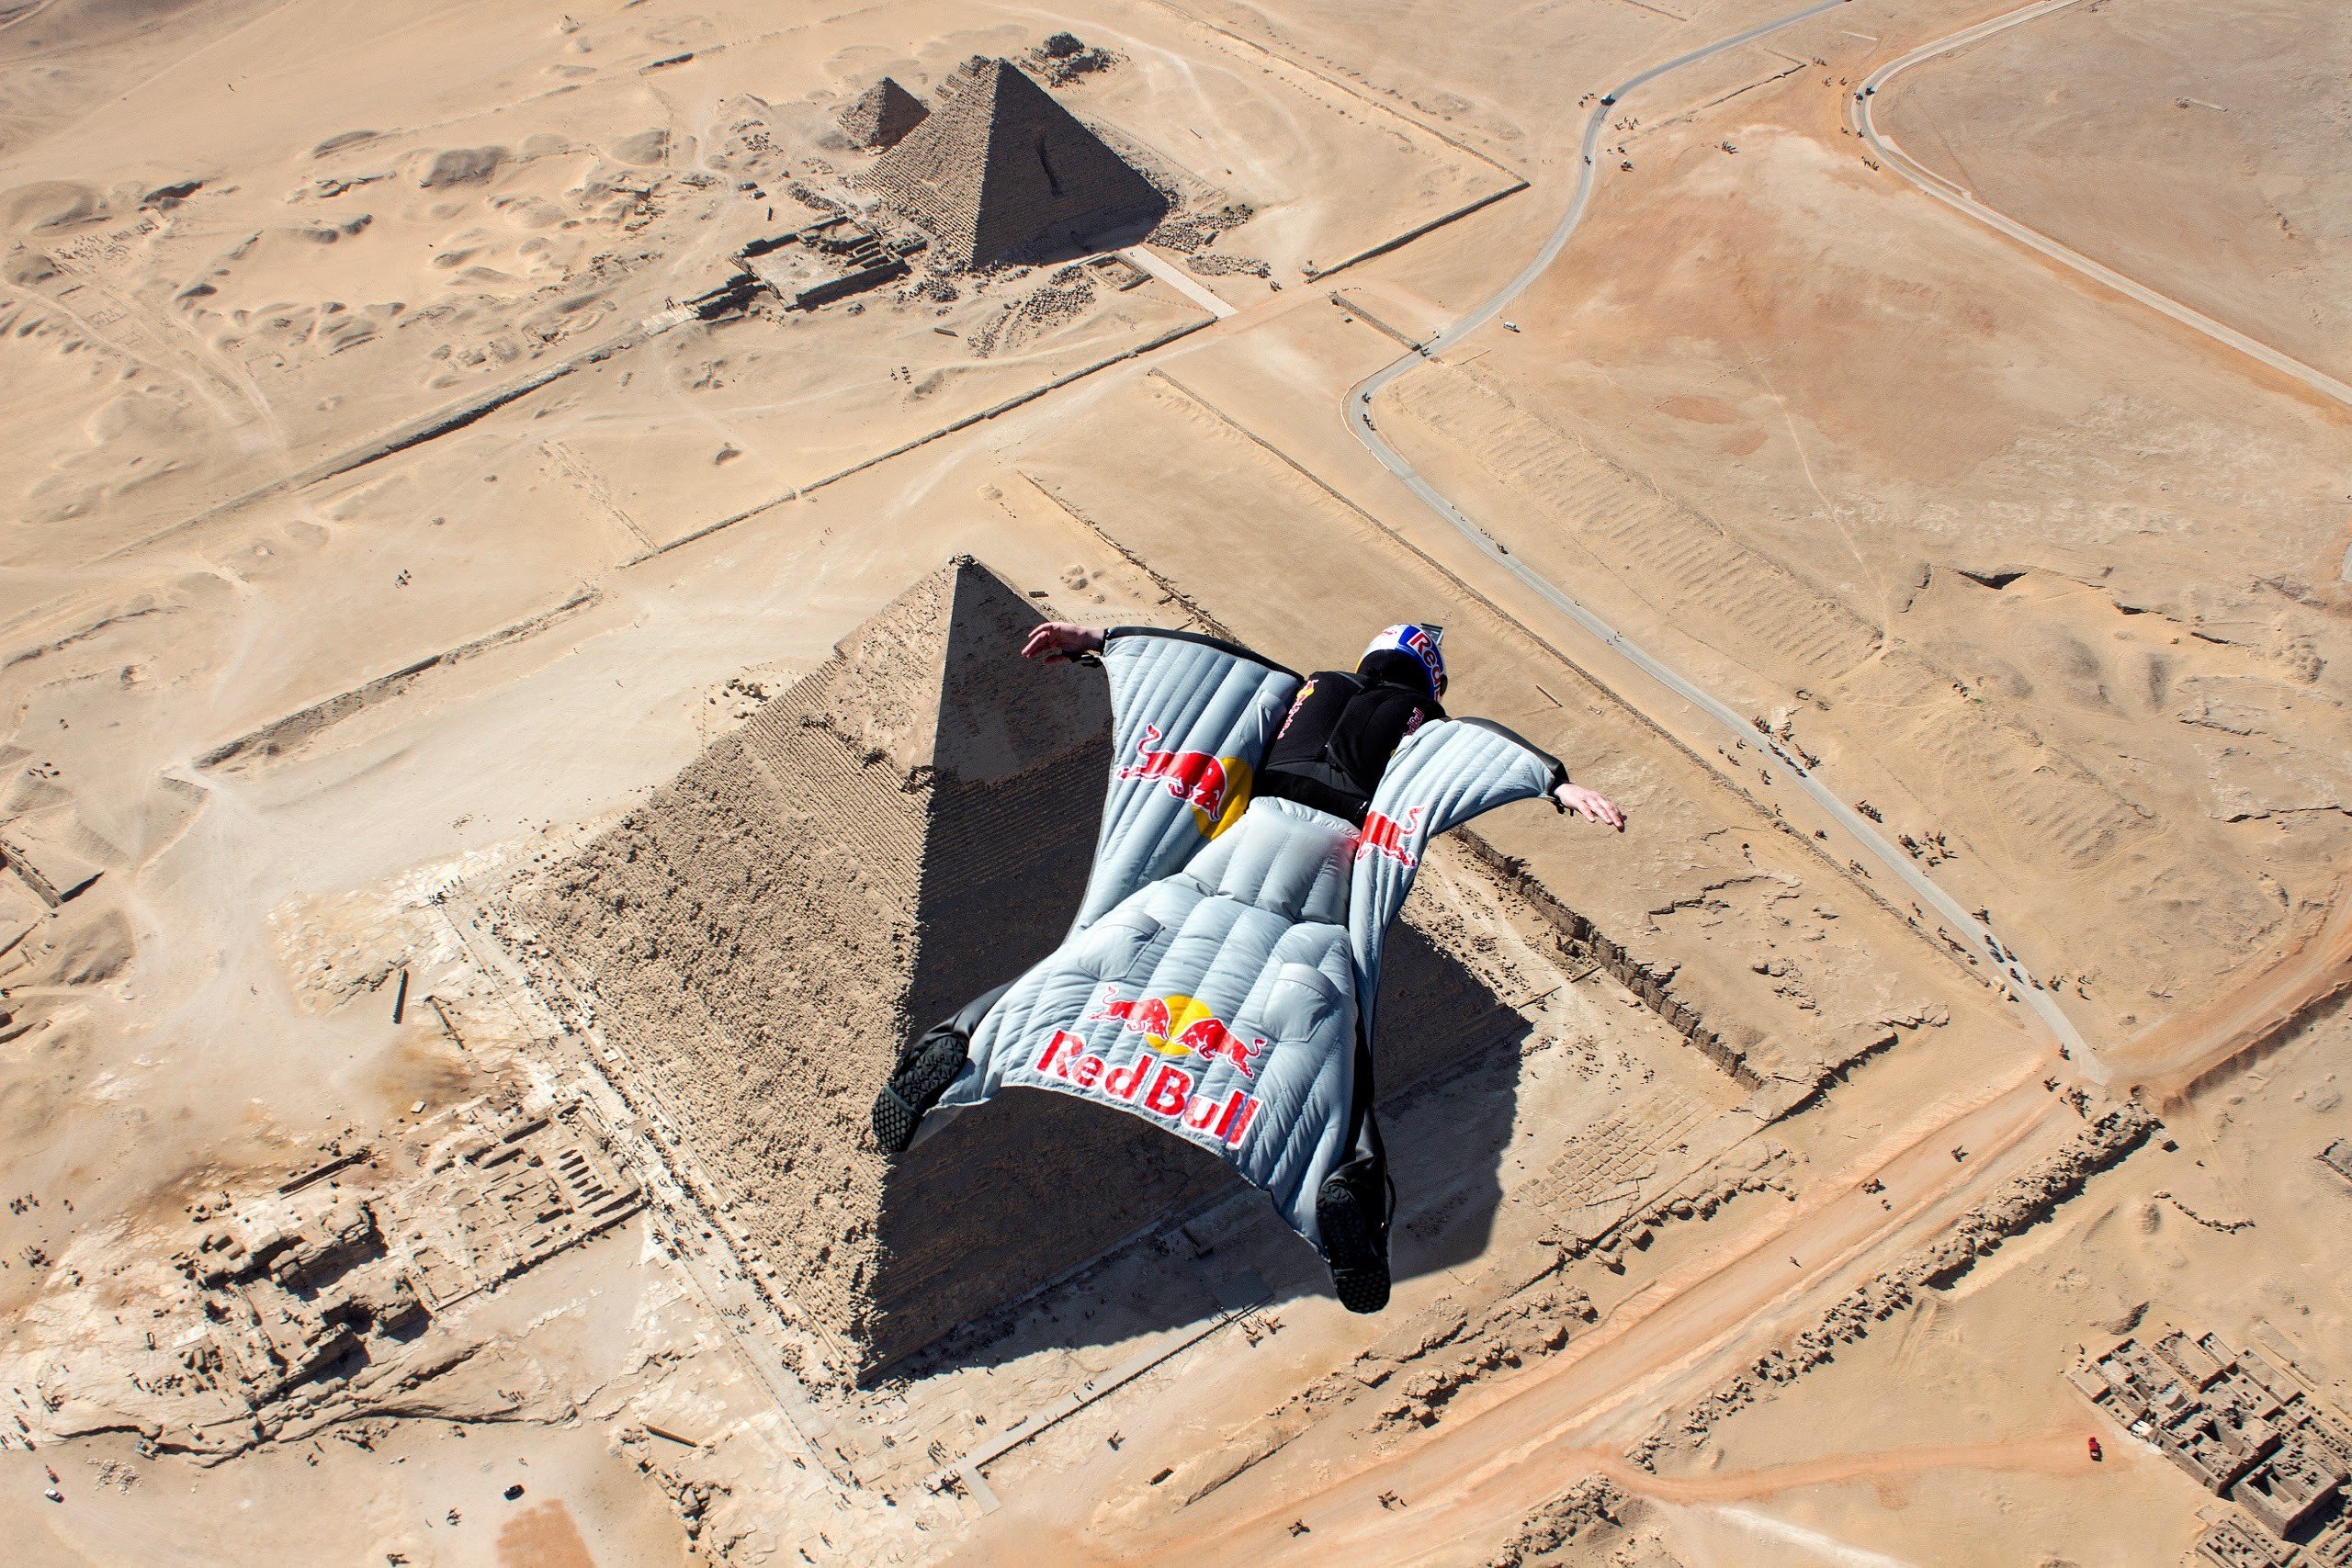 men, Sports, Parachutes, Jumping, Birds eye view, Nature, Sand, Flying, Helmet, Wingsuits, Desert, Pyramids of Giza, Egypt, Red Bull Wallpaper